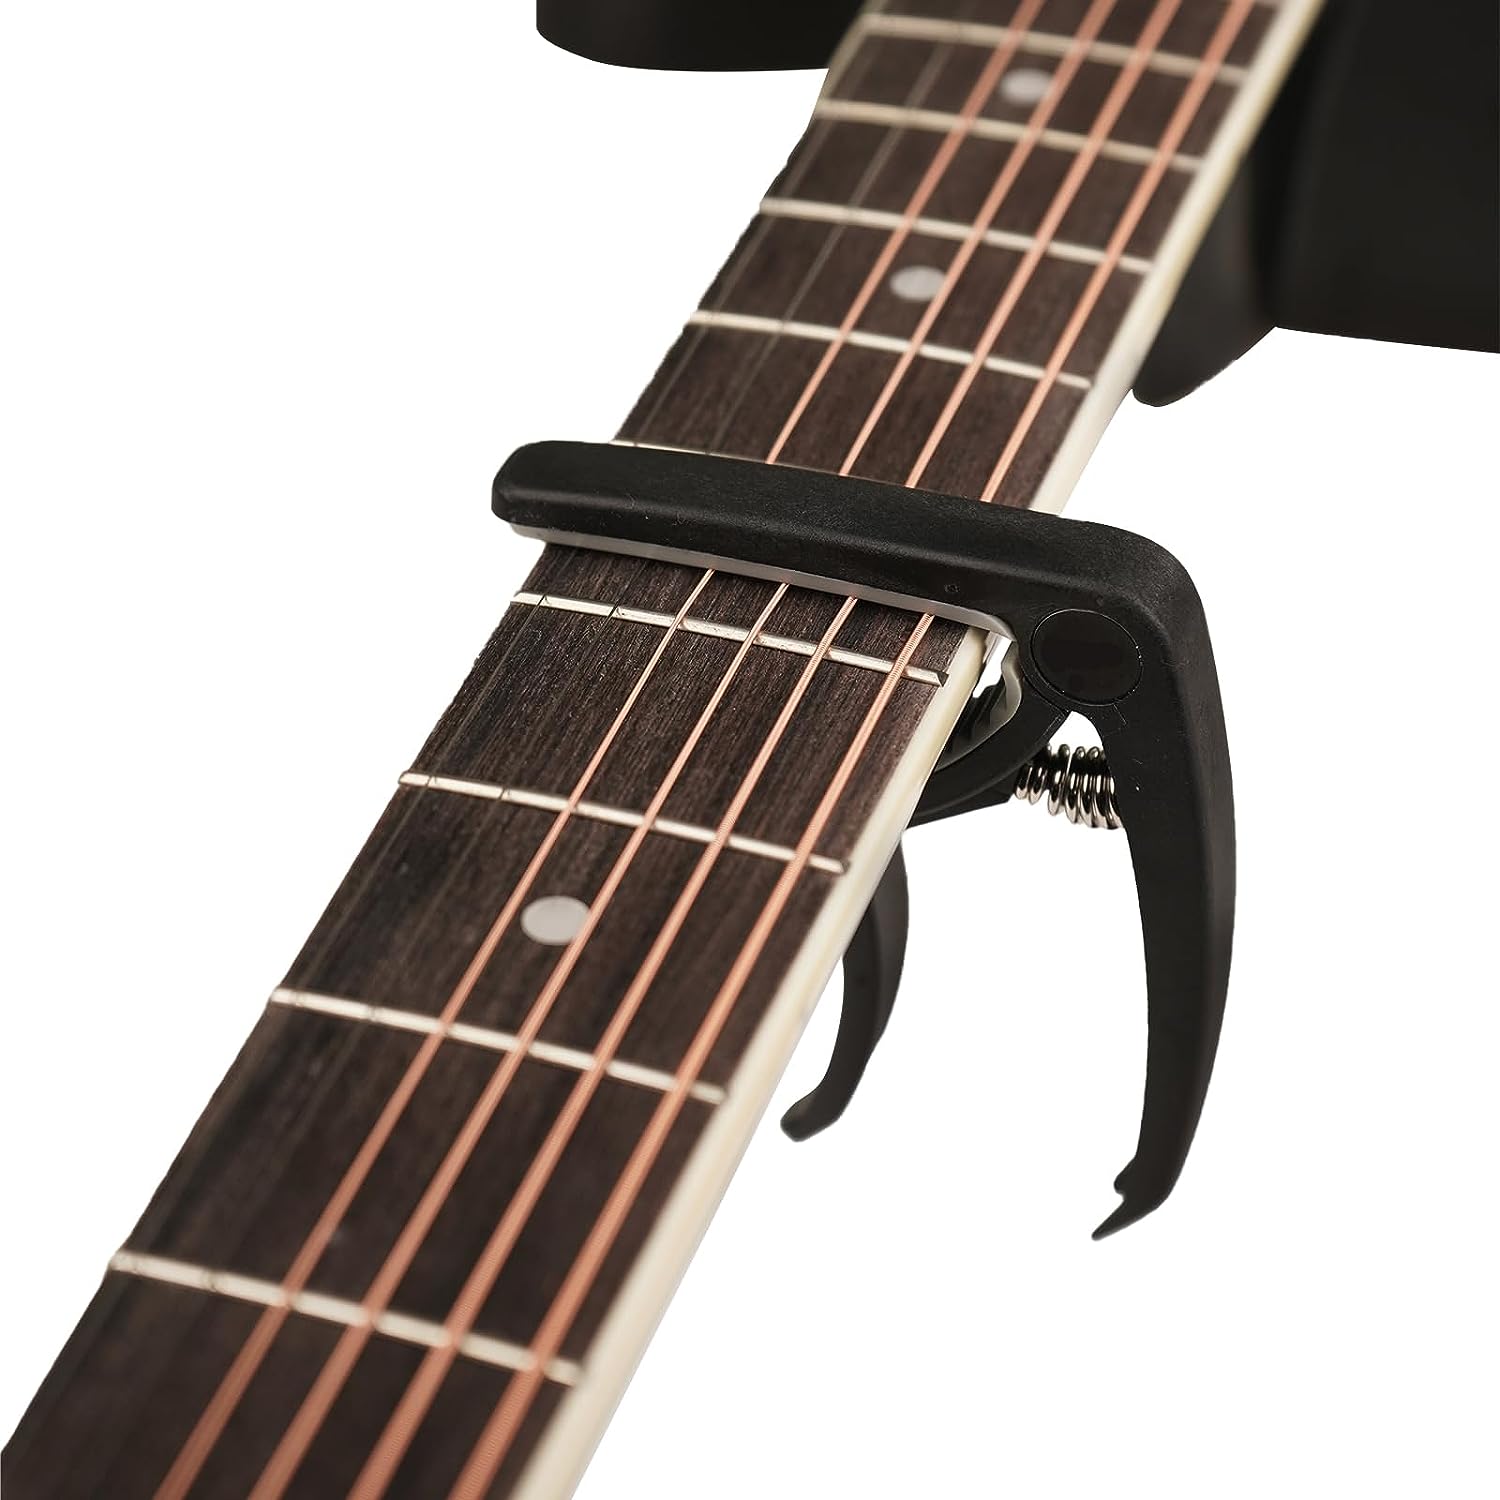 Kadence Guitar Capo Heavy duty ABS Material with Pin Remover - Kadence